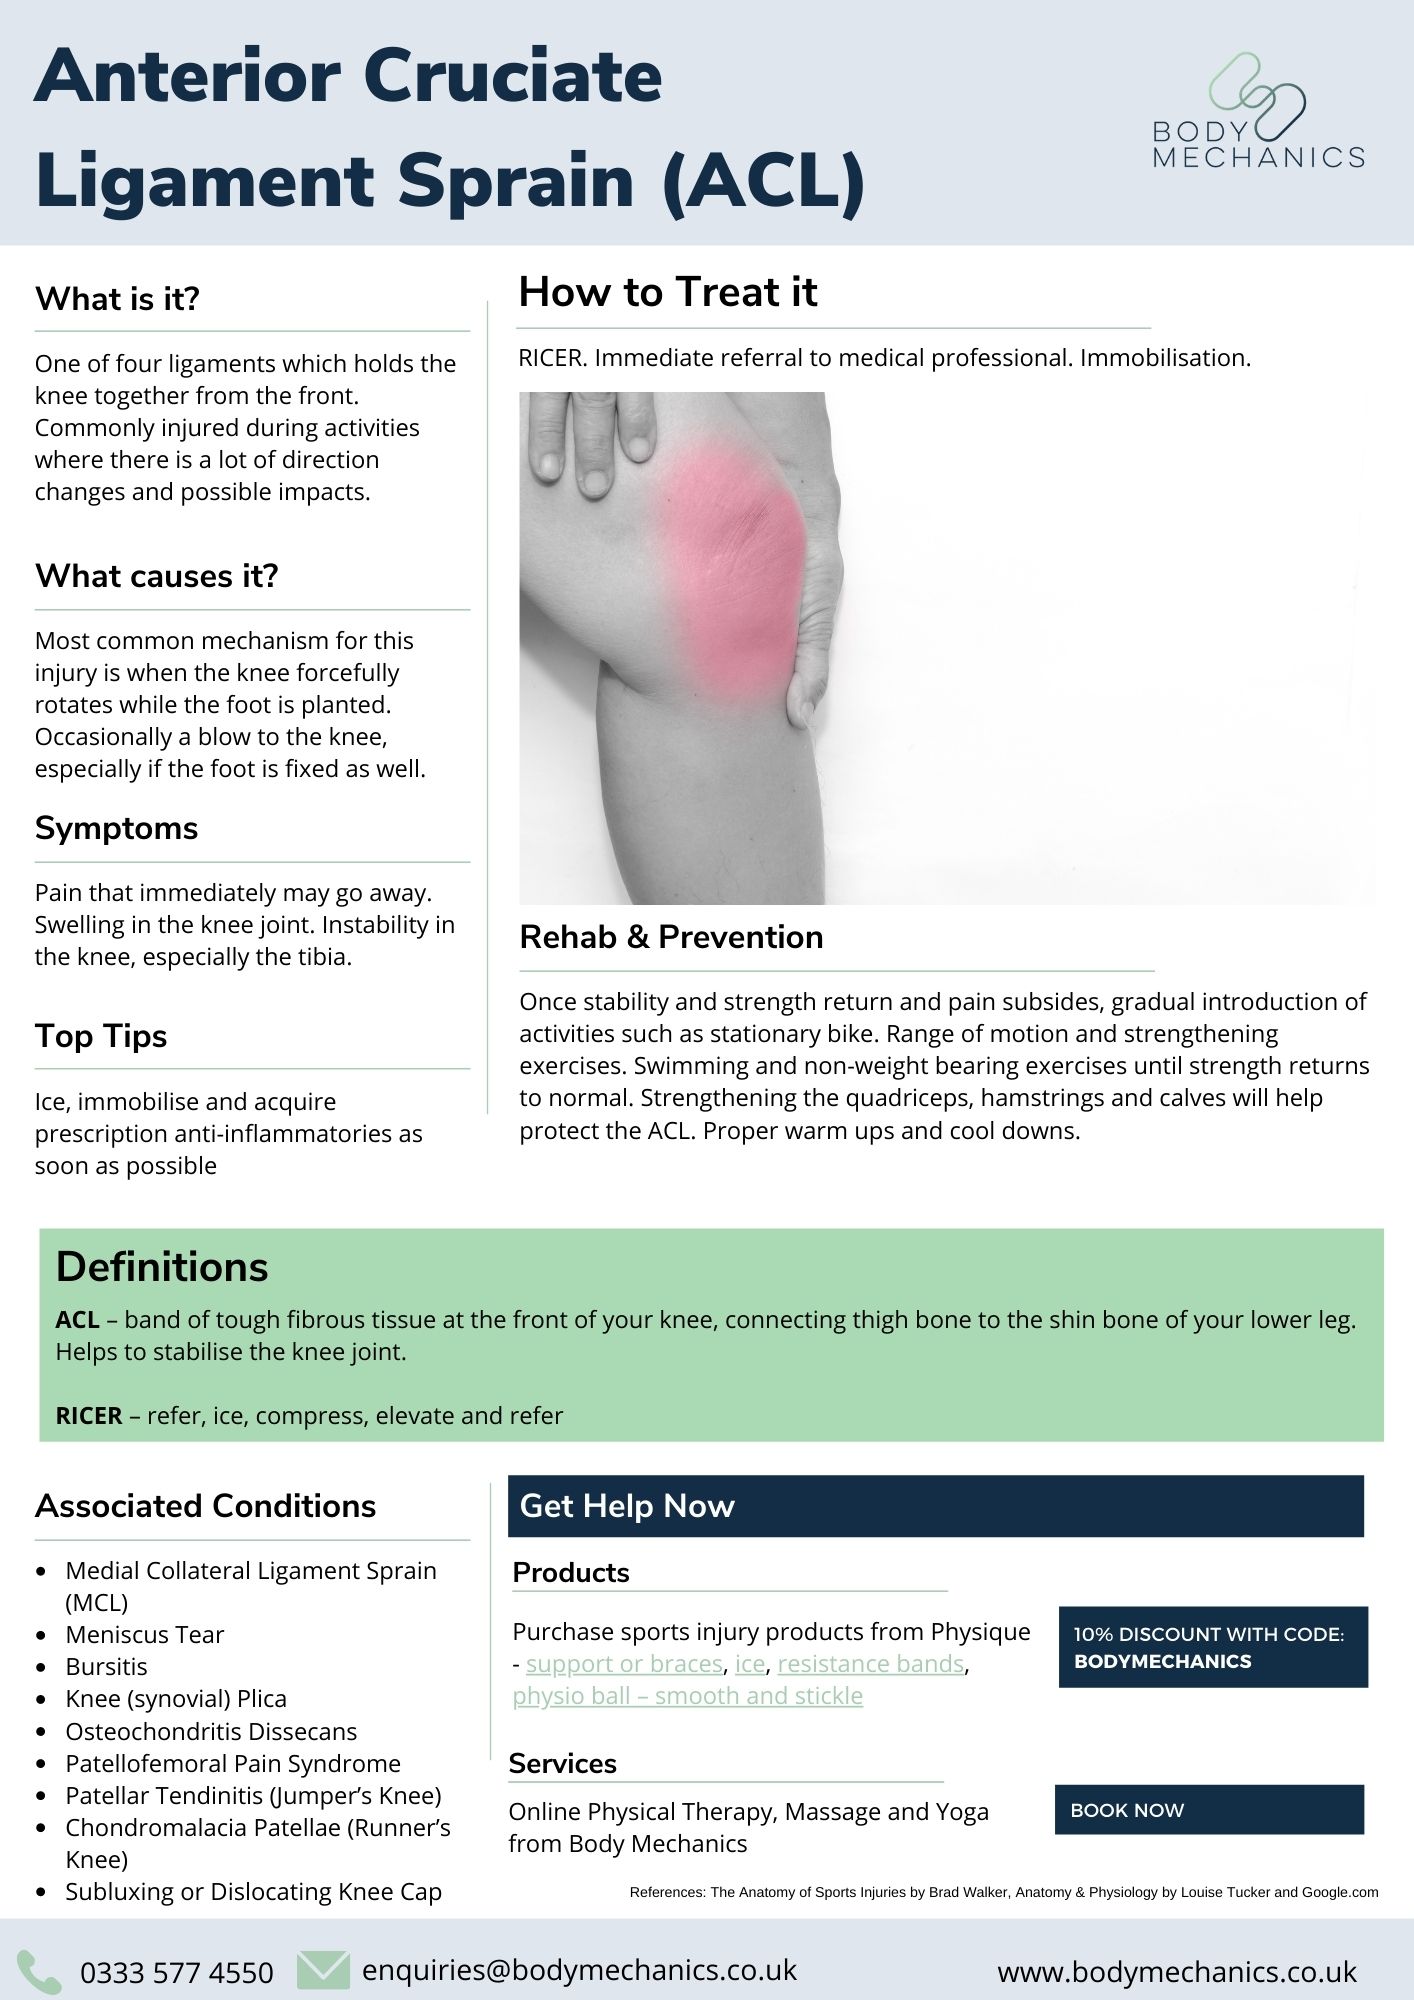 Anterior Cruciate Ligament Sprain (ACL) Infosheet